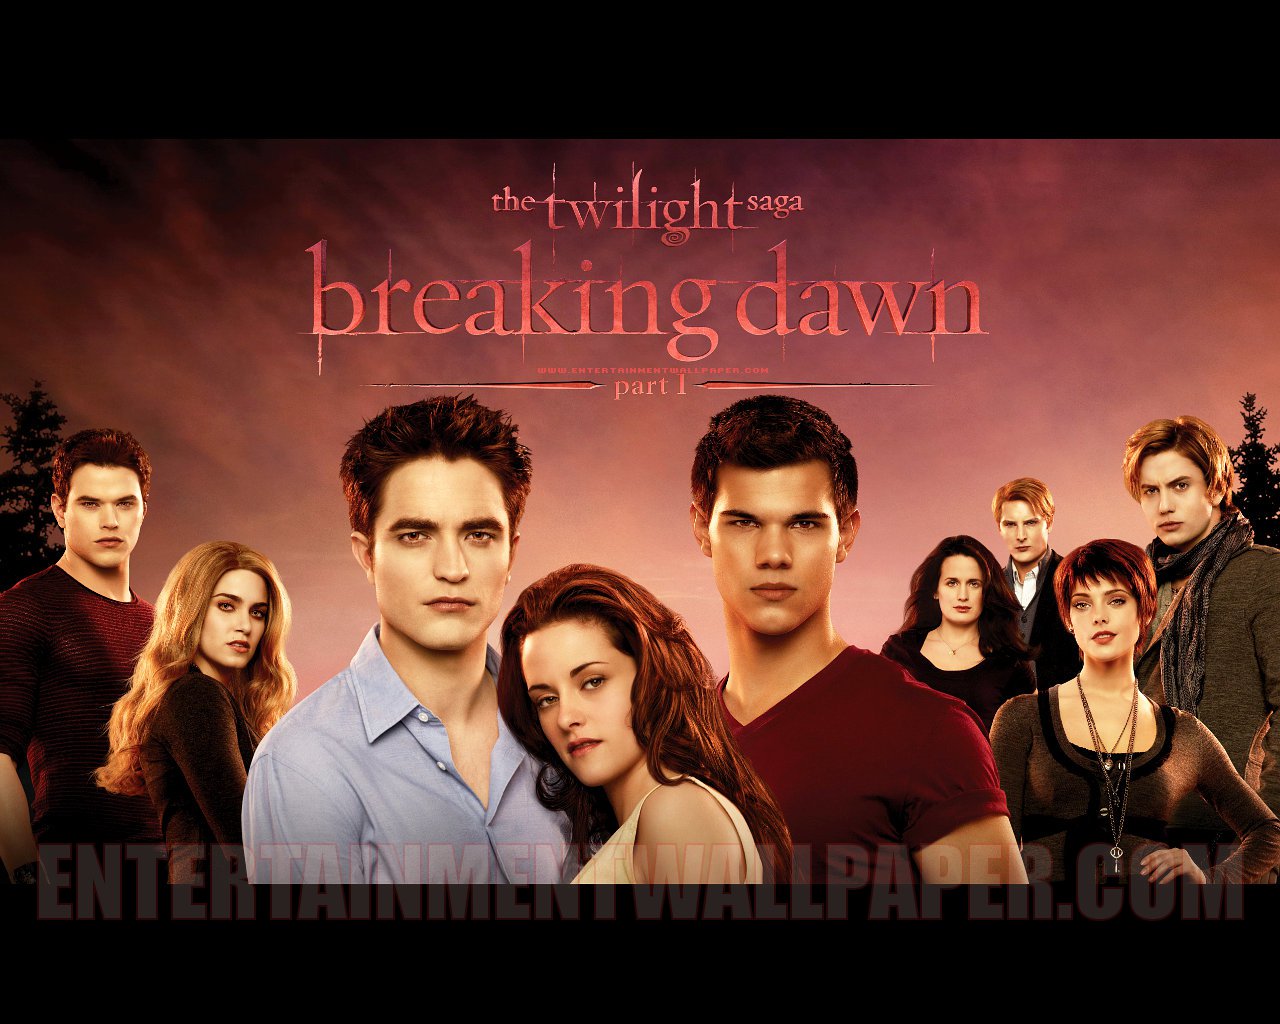 ... deathly Hallows Part. 2 VS. The Twilight Saga's Breaking Dawn Part. 1